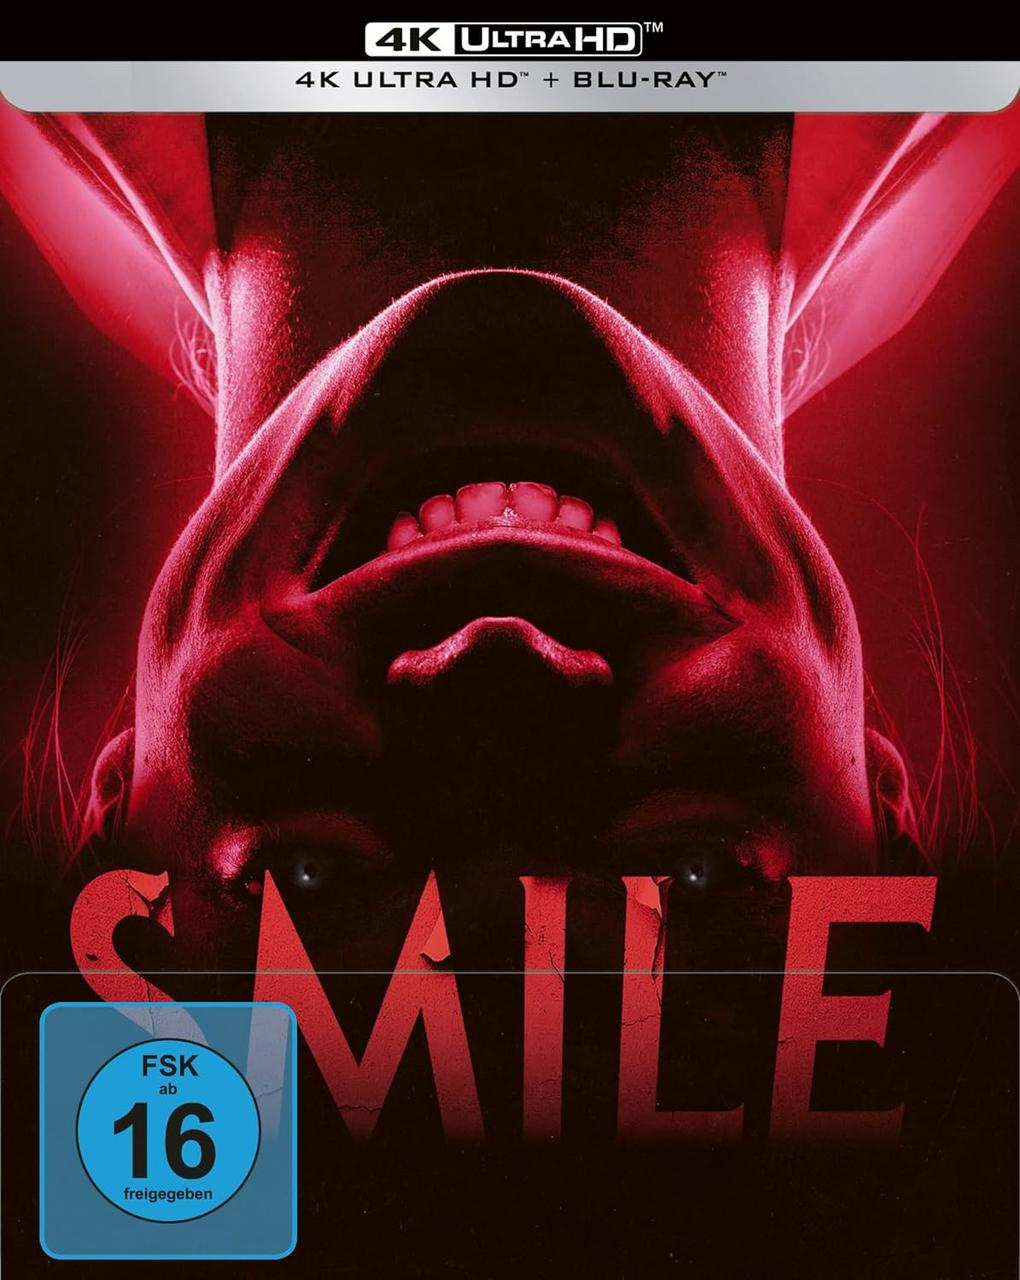 Blu-ray Blu-ray Edition - - 4K es SteelBook® Siehst - Exklusive Smile Ultra + auch? HD du